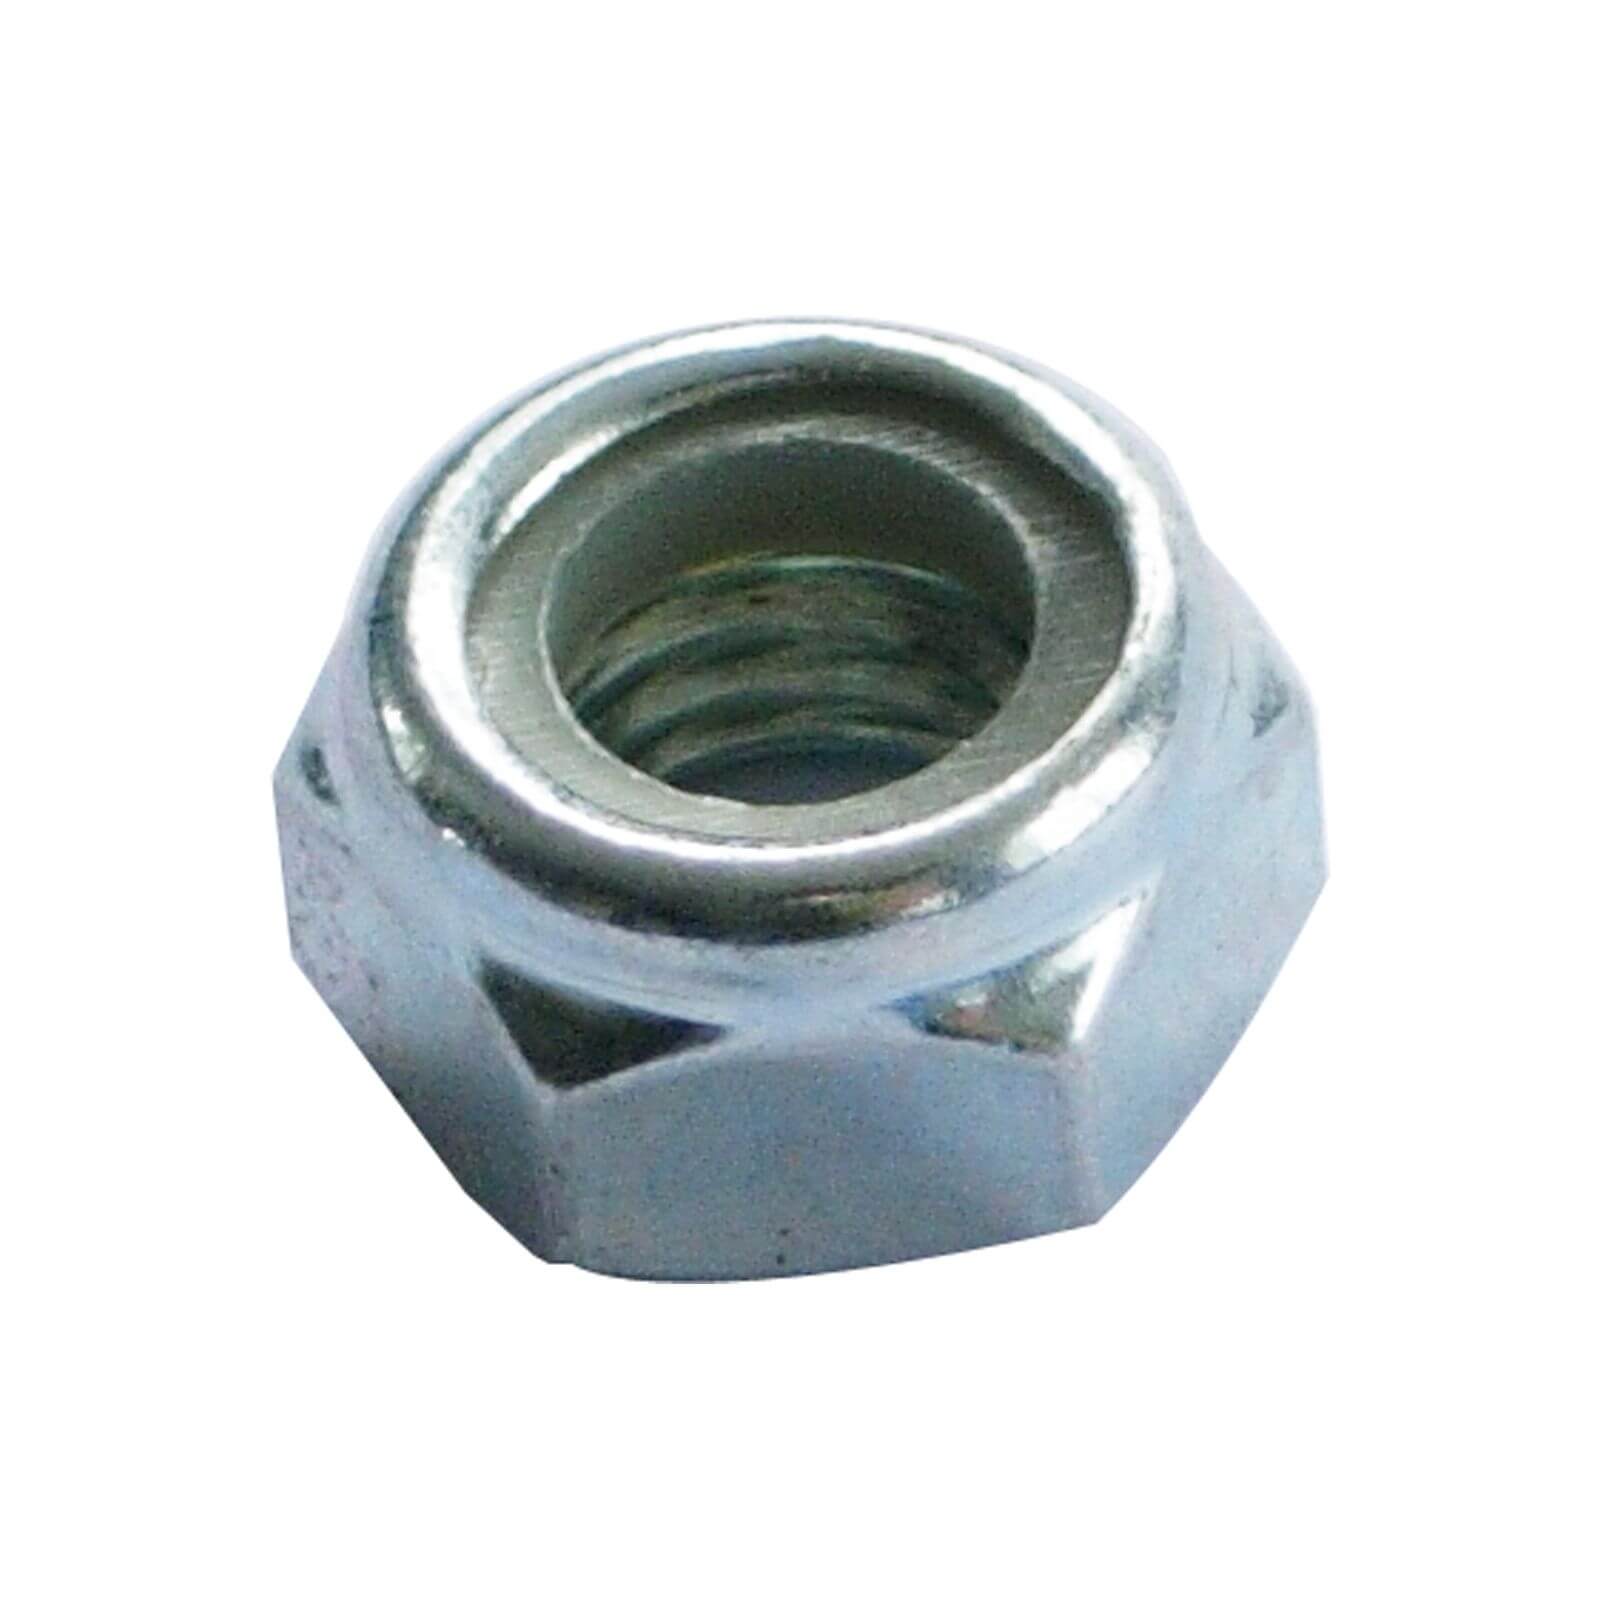 Locking Nut - Bright Zinc Plated - M6 - 10 Pack